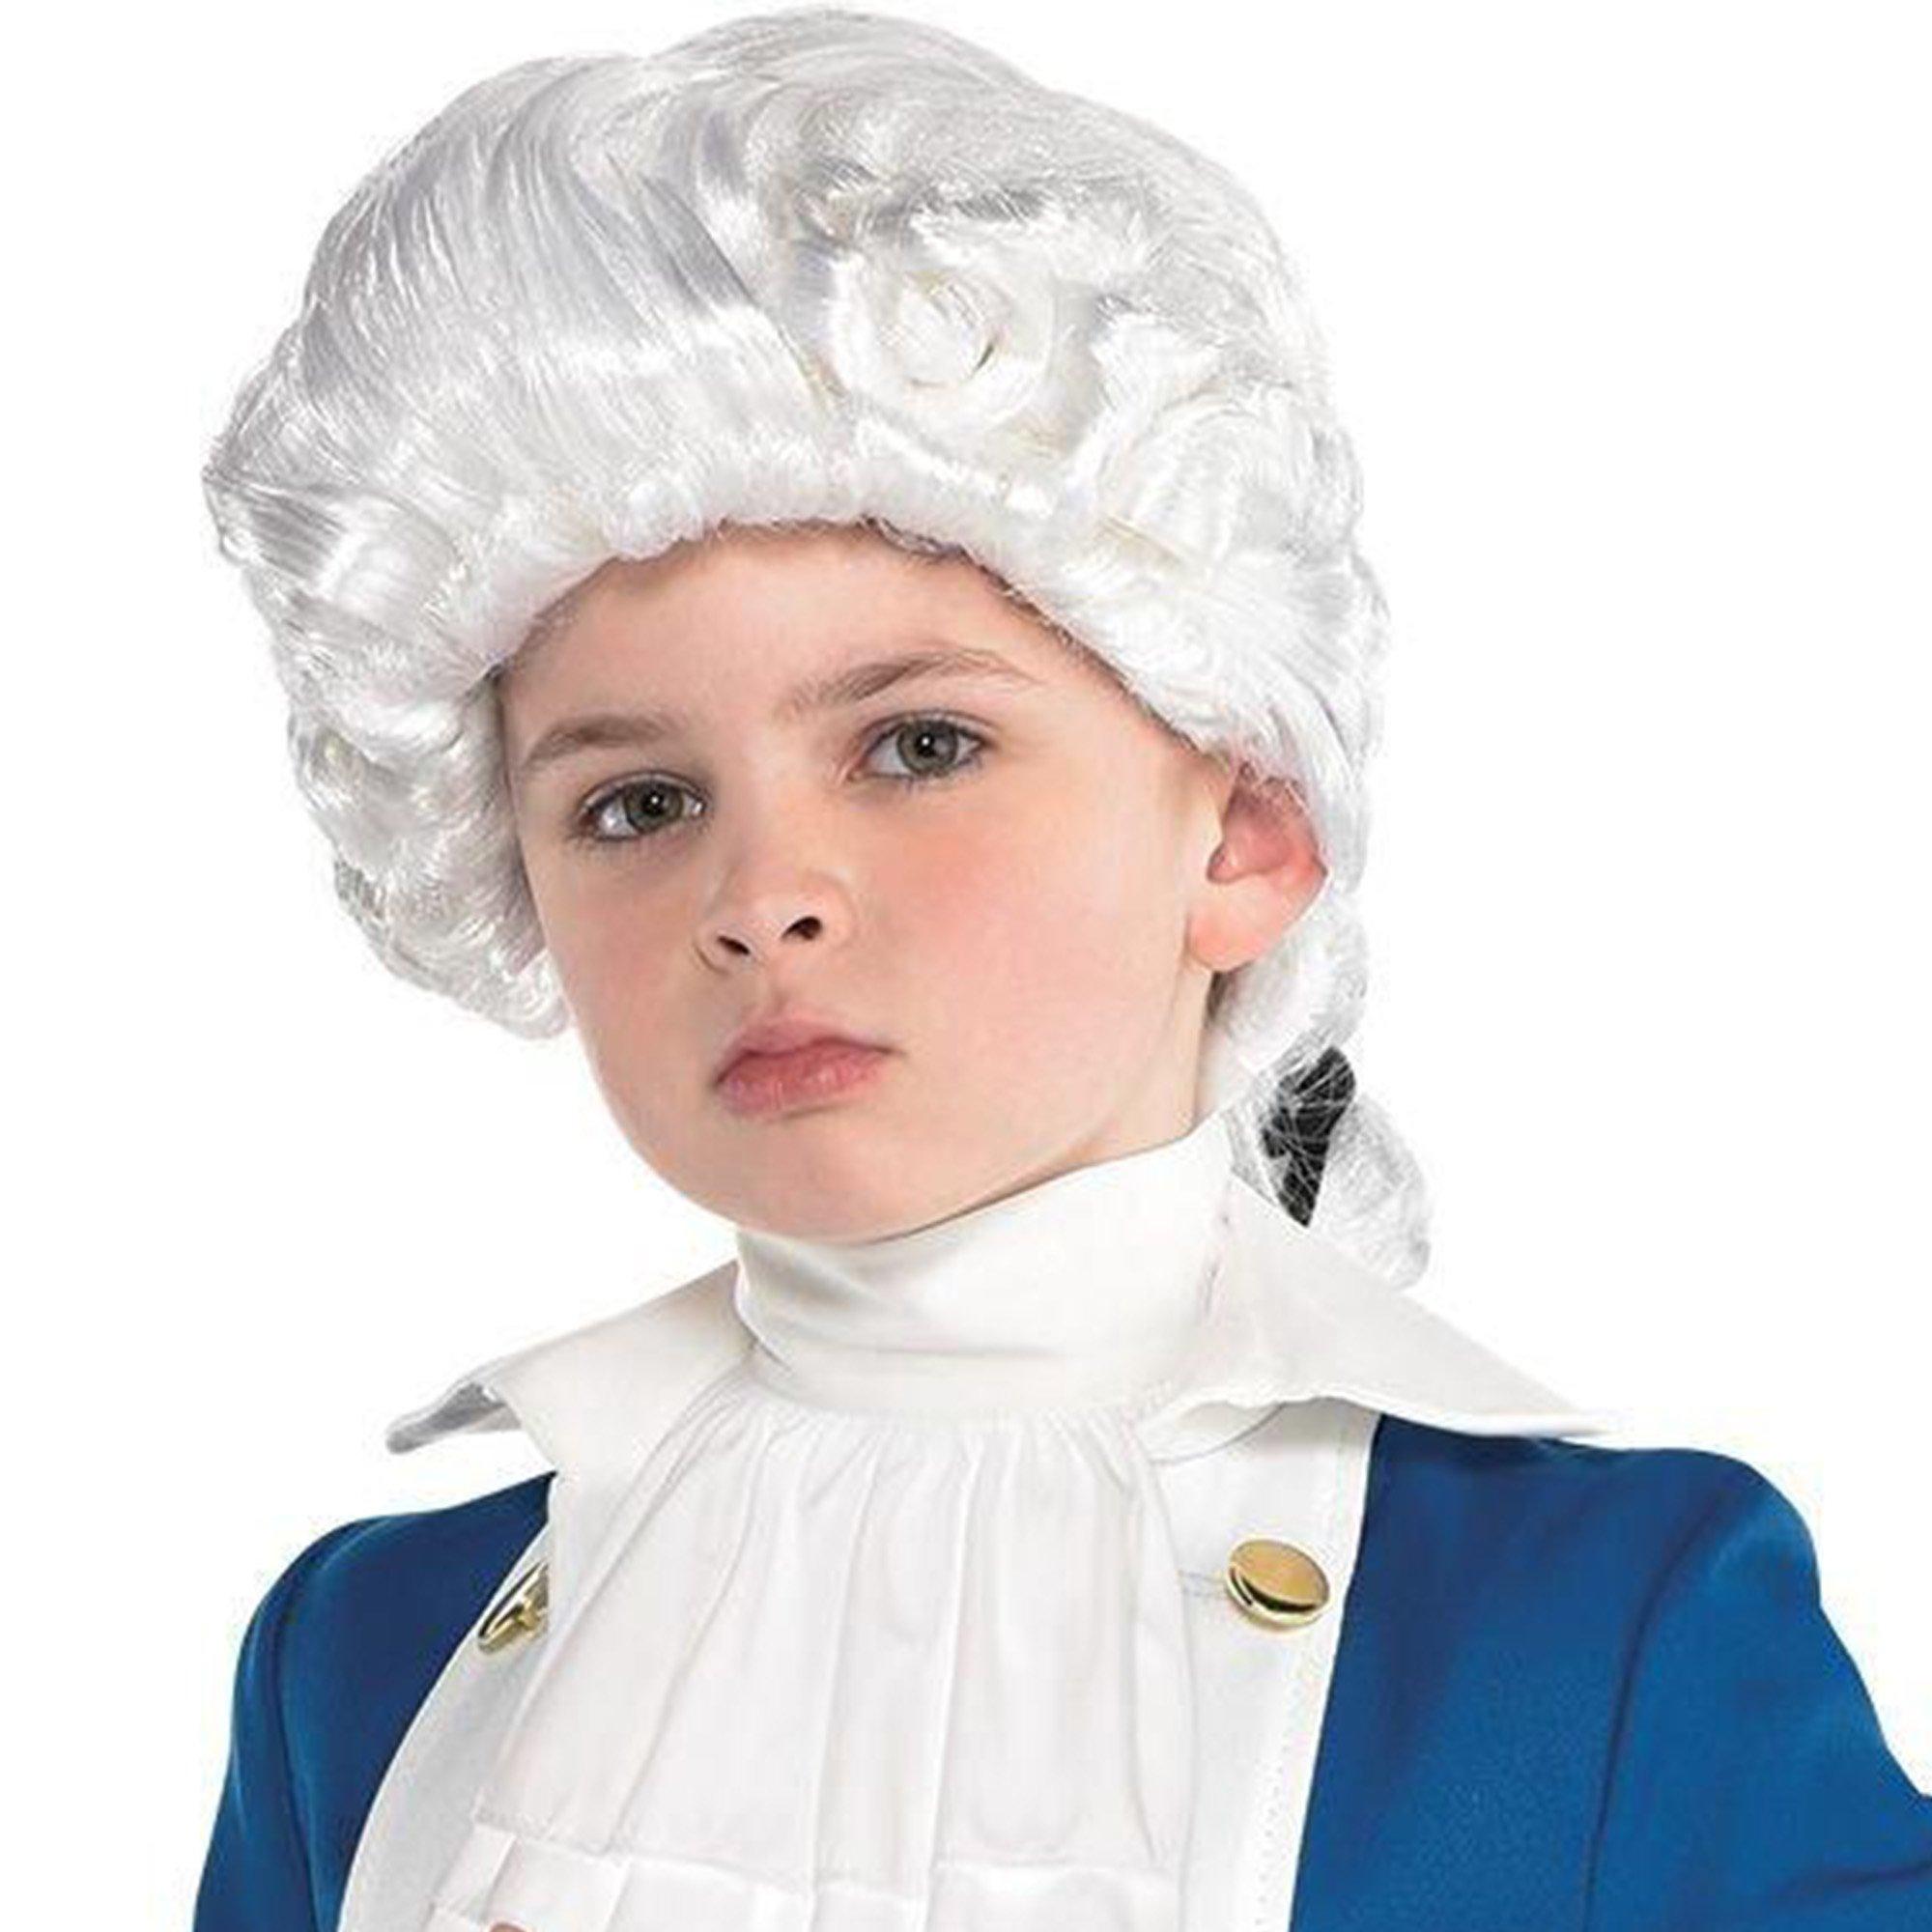 Boys George Washington Costume Accessory Kit